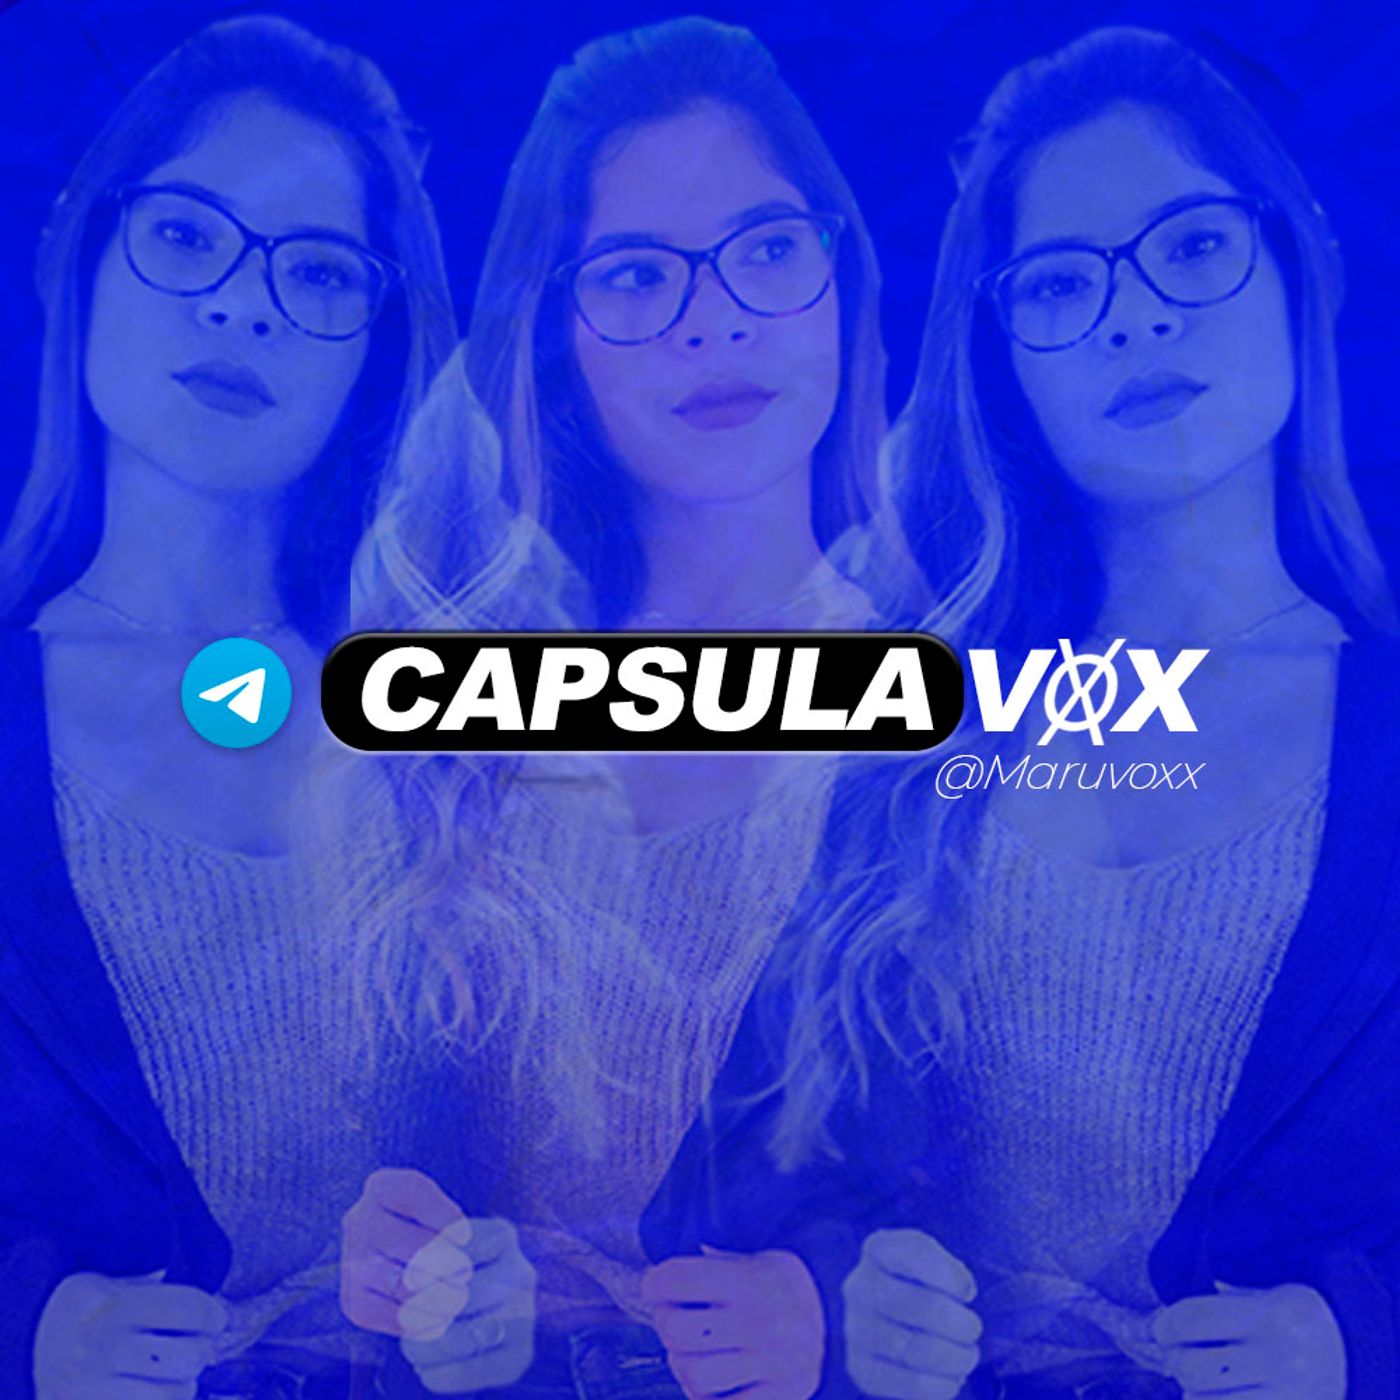 CAPSULA VOX